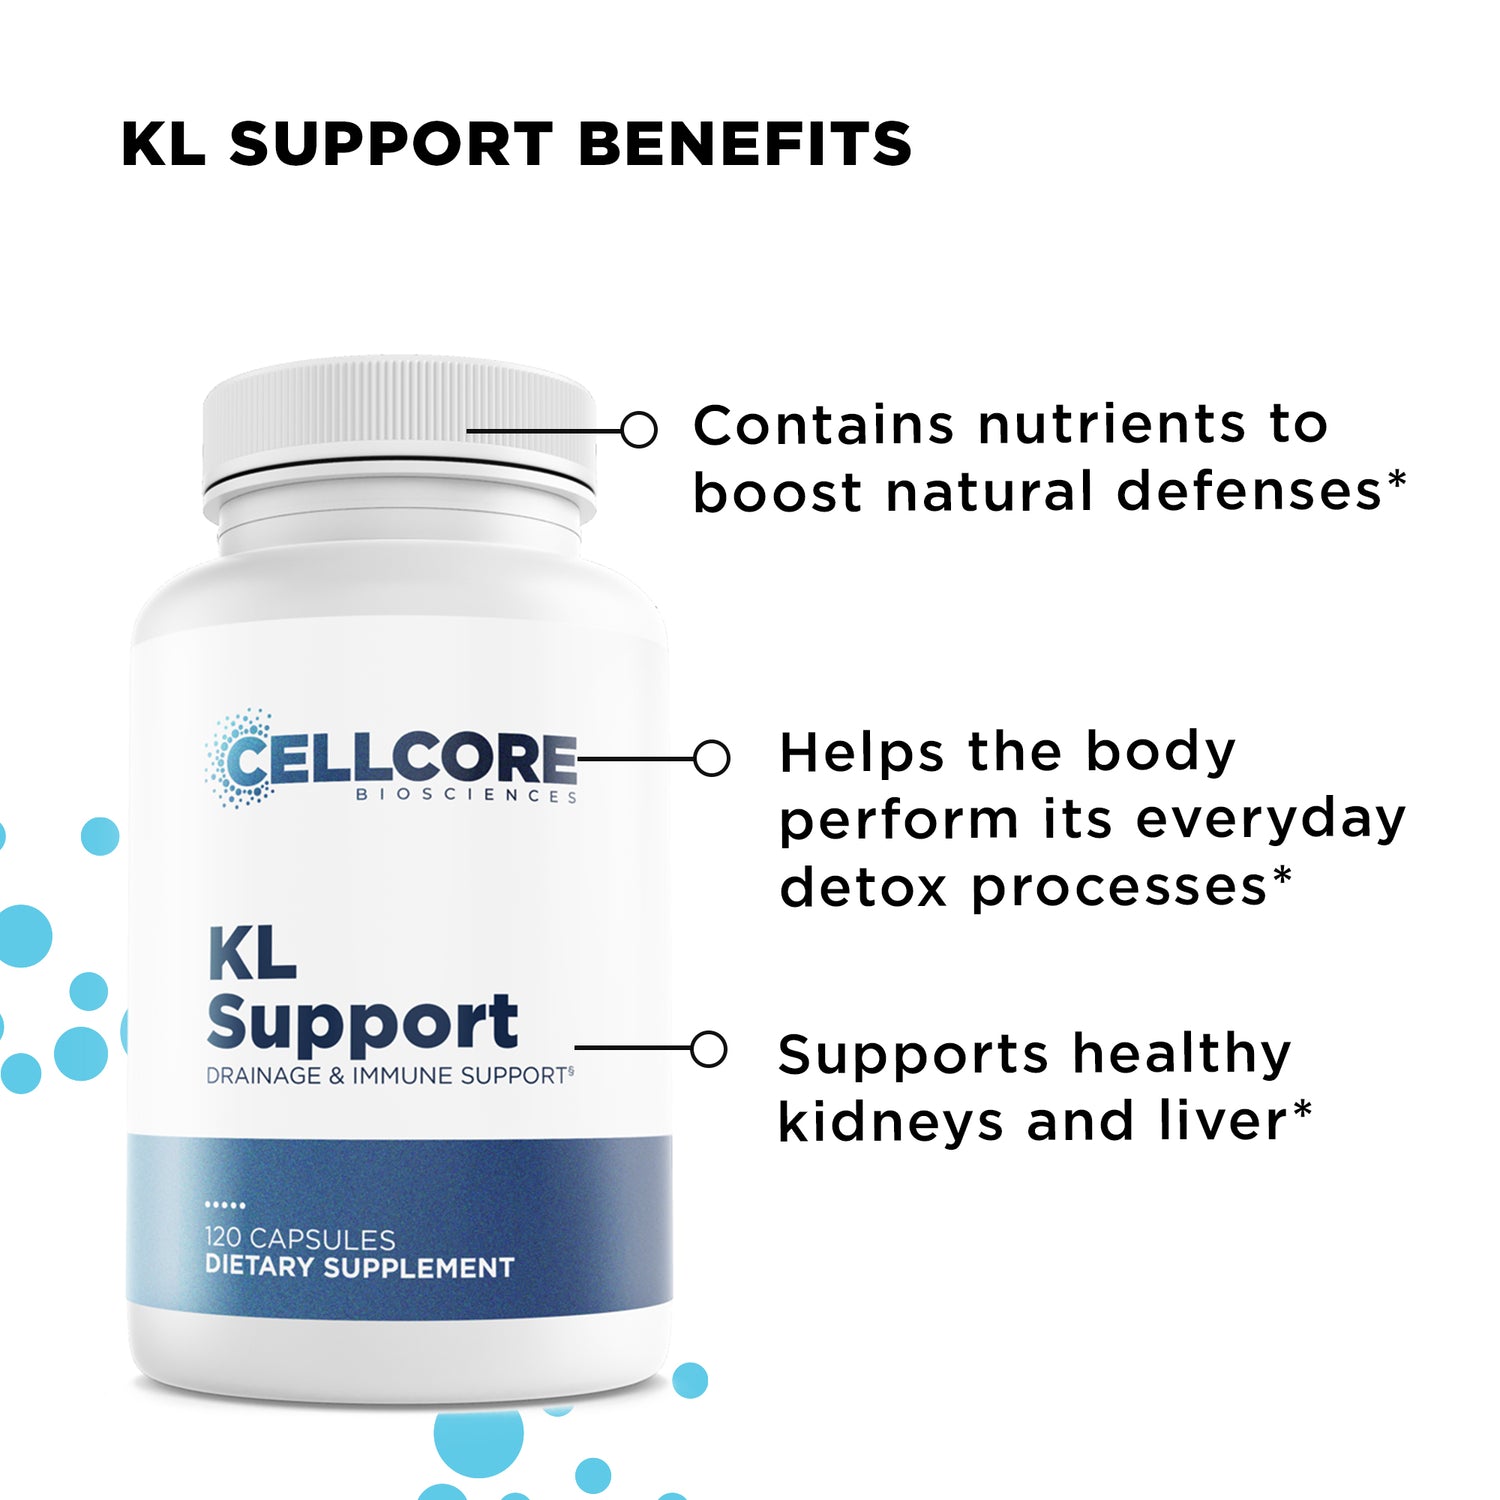 KL Support Benefits